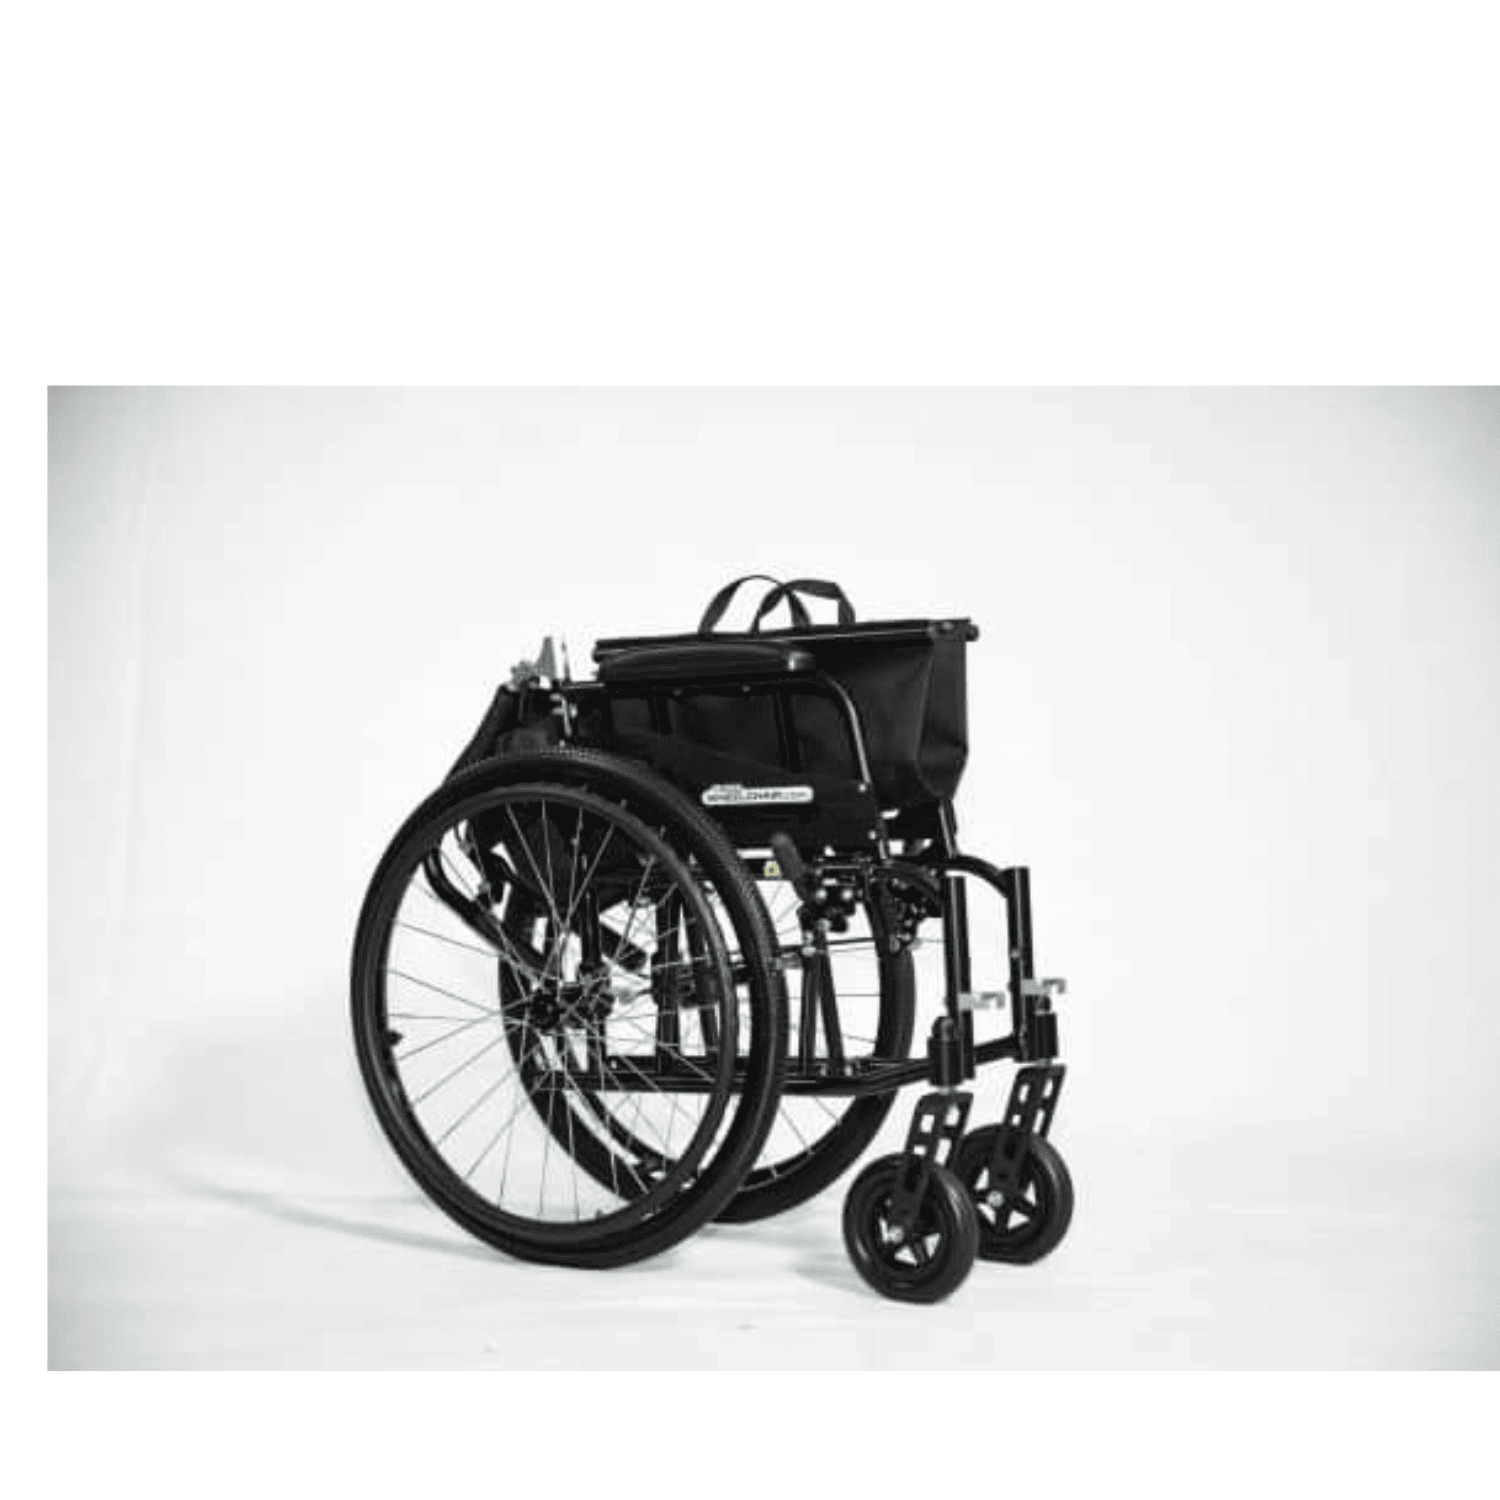 Afikim Ultra-Lite Self Propelled Wheelchair – Standard